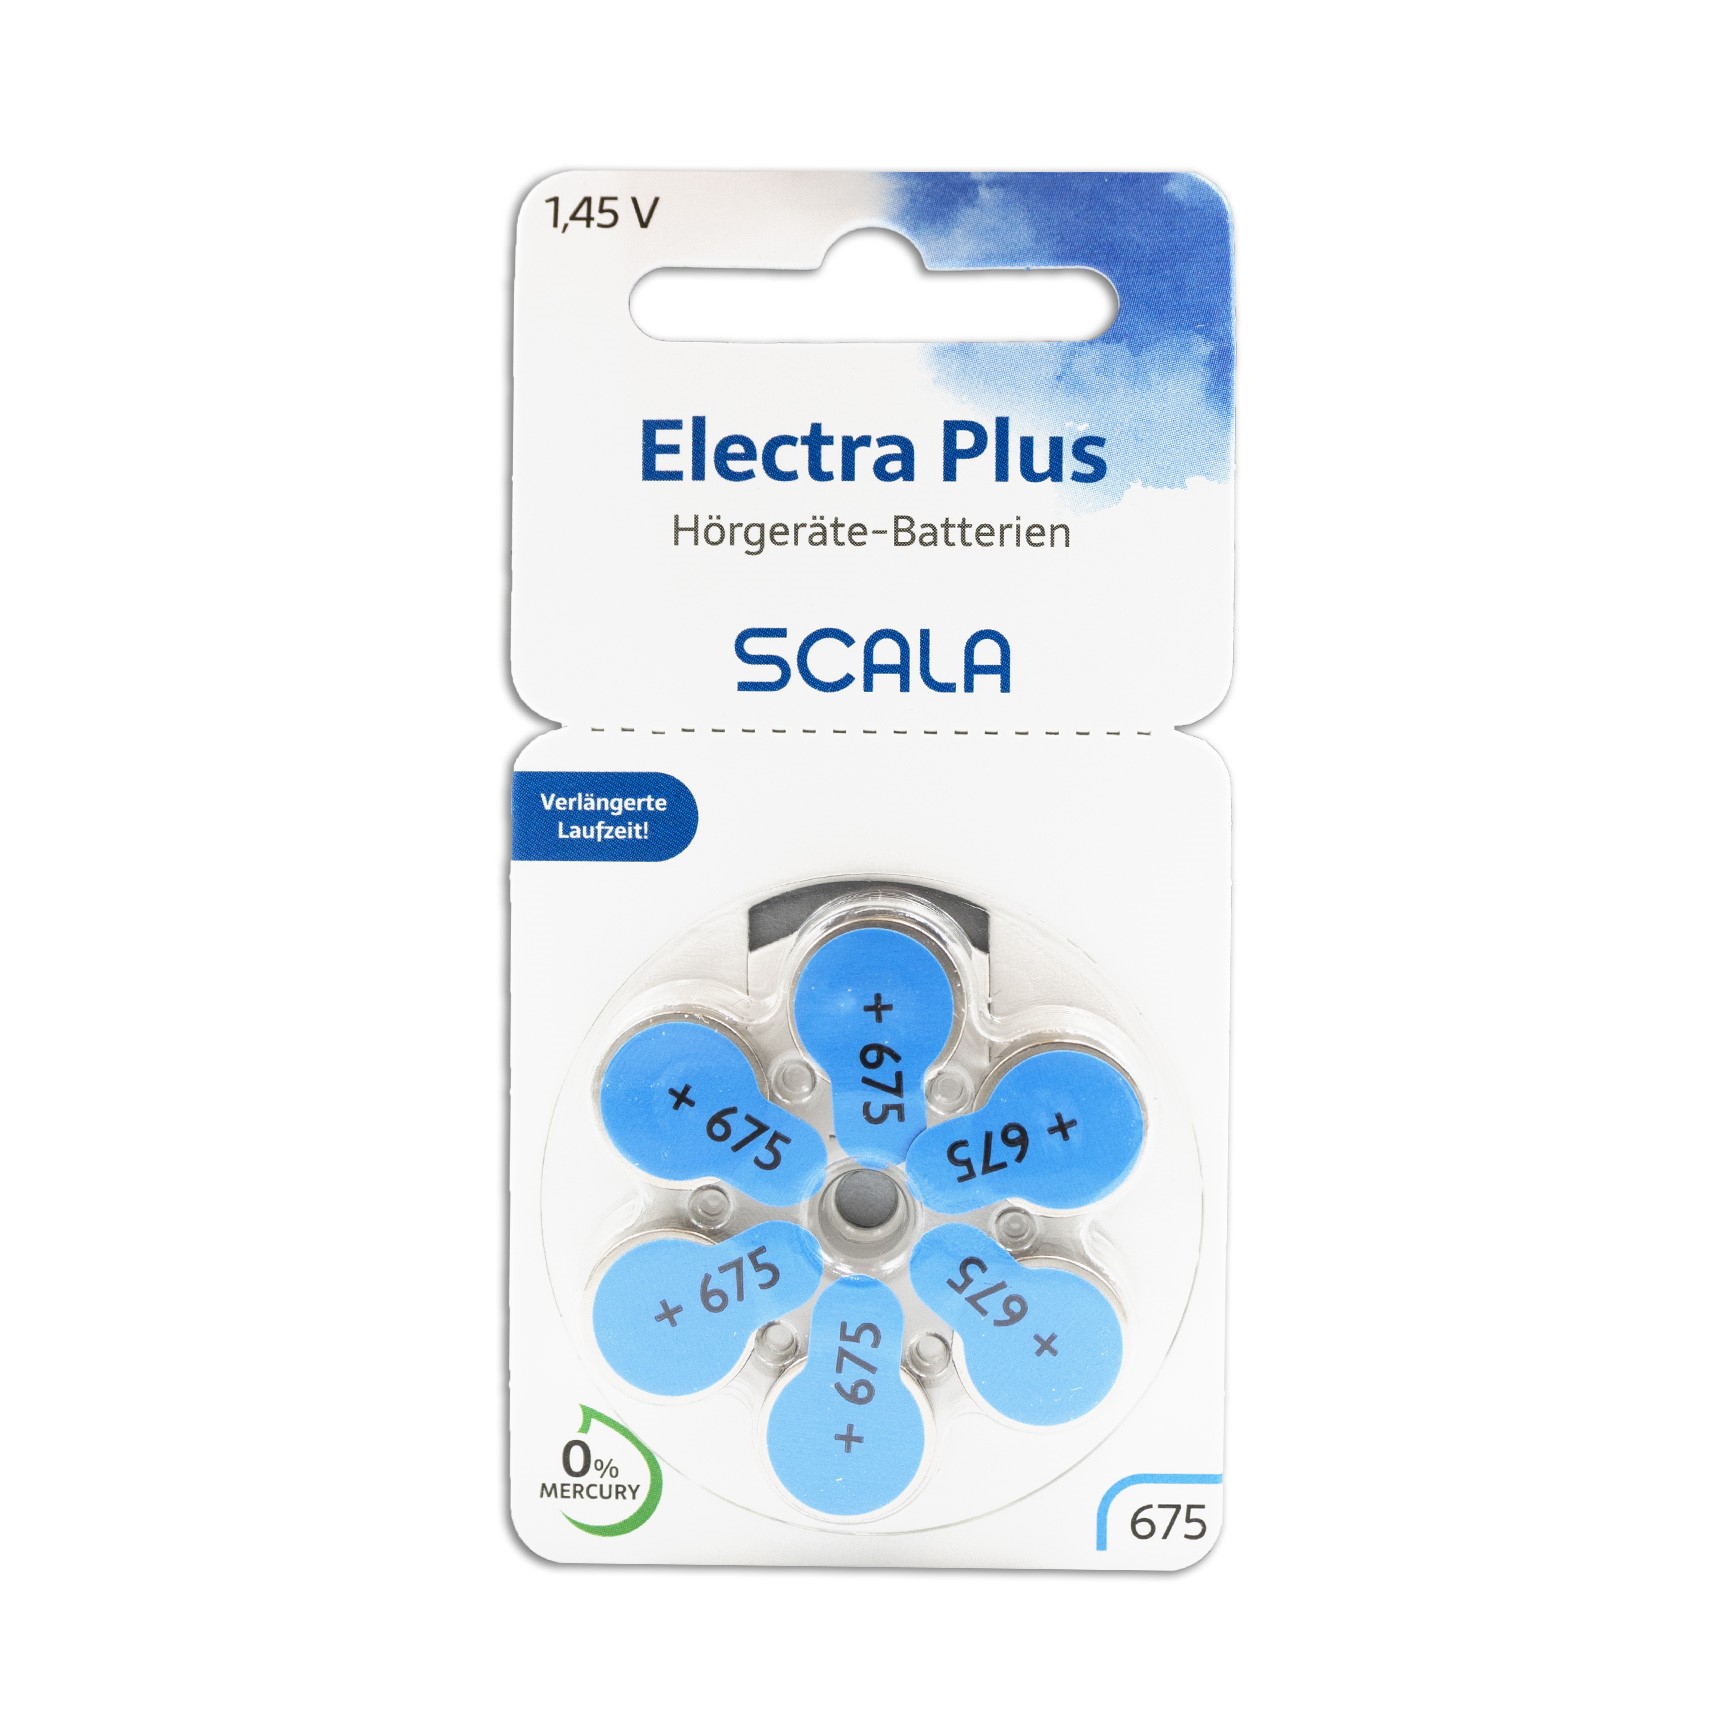  Scala 10er Pack Högerätebatterien - Electra Plus 675 mercury free 